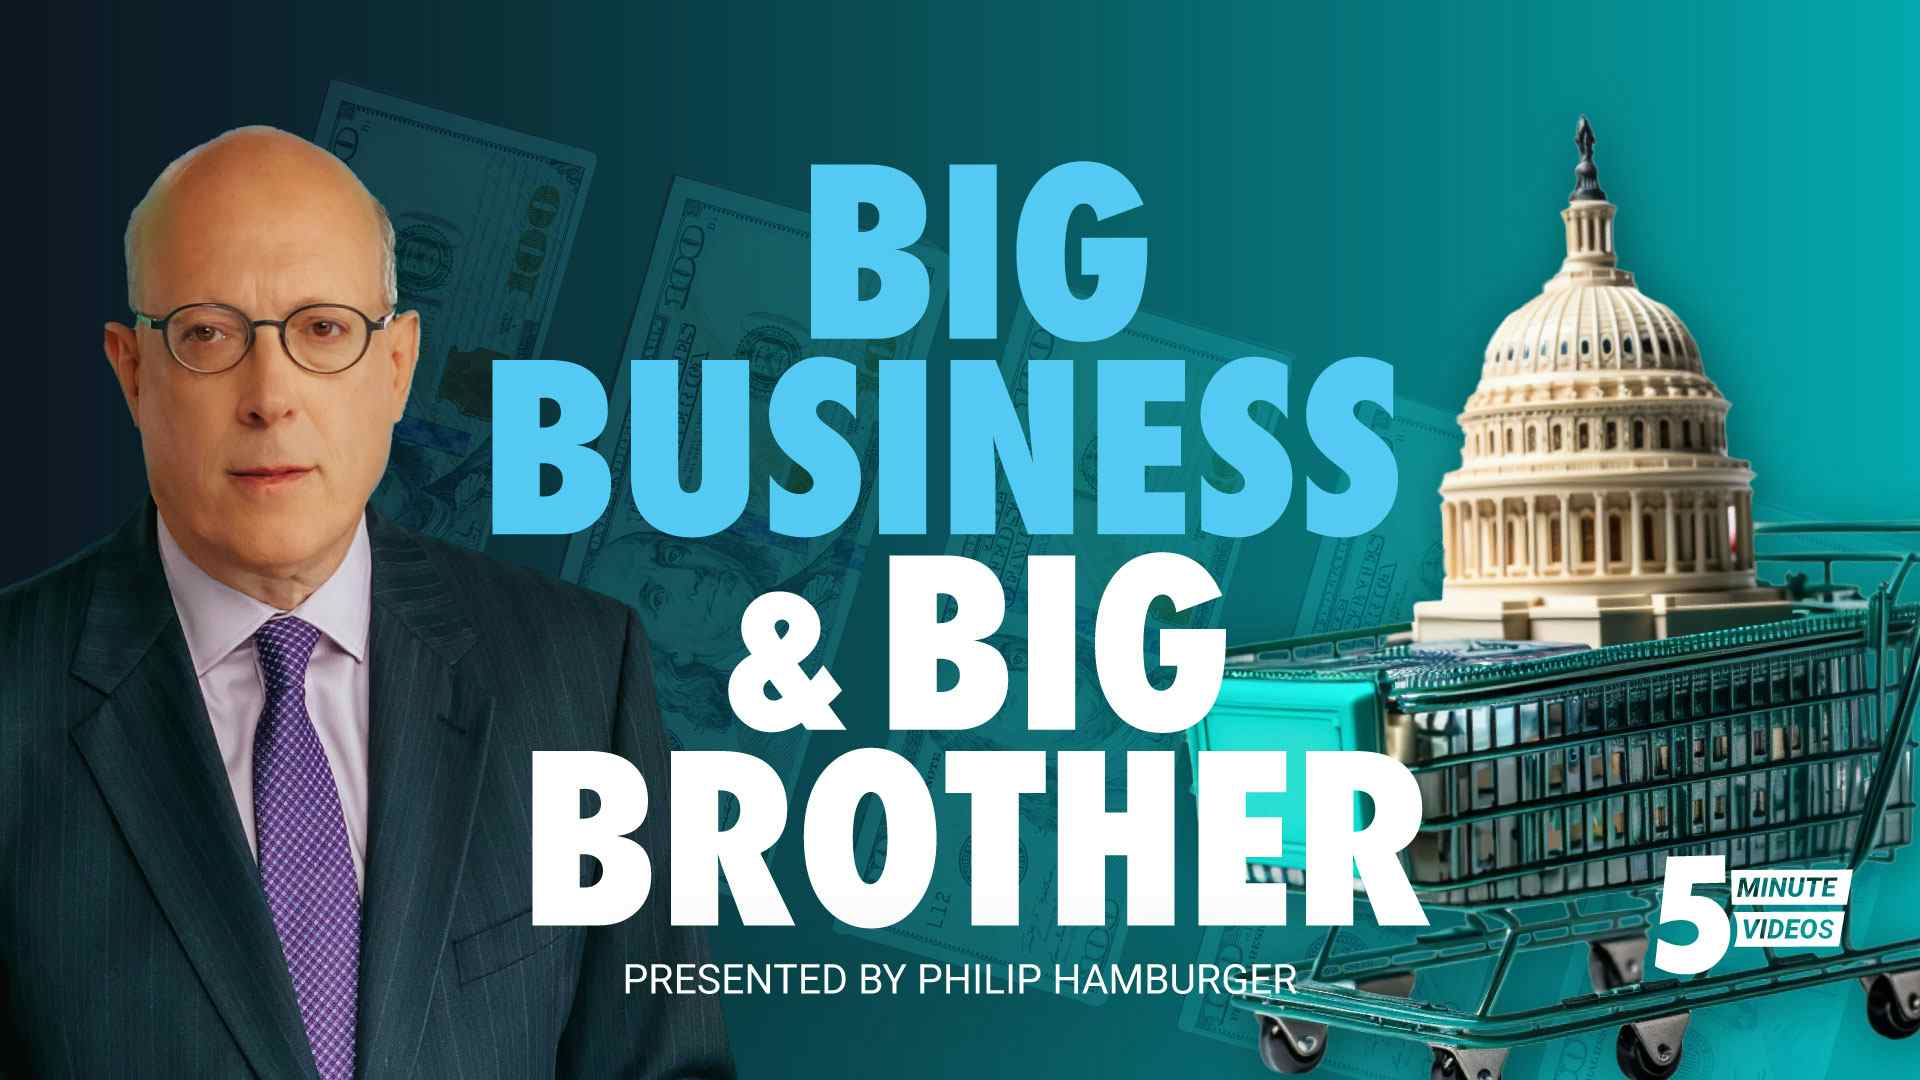 Big Business & Big Brother